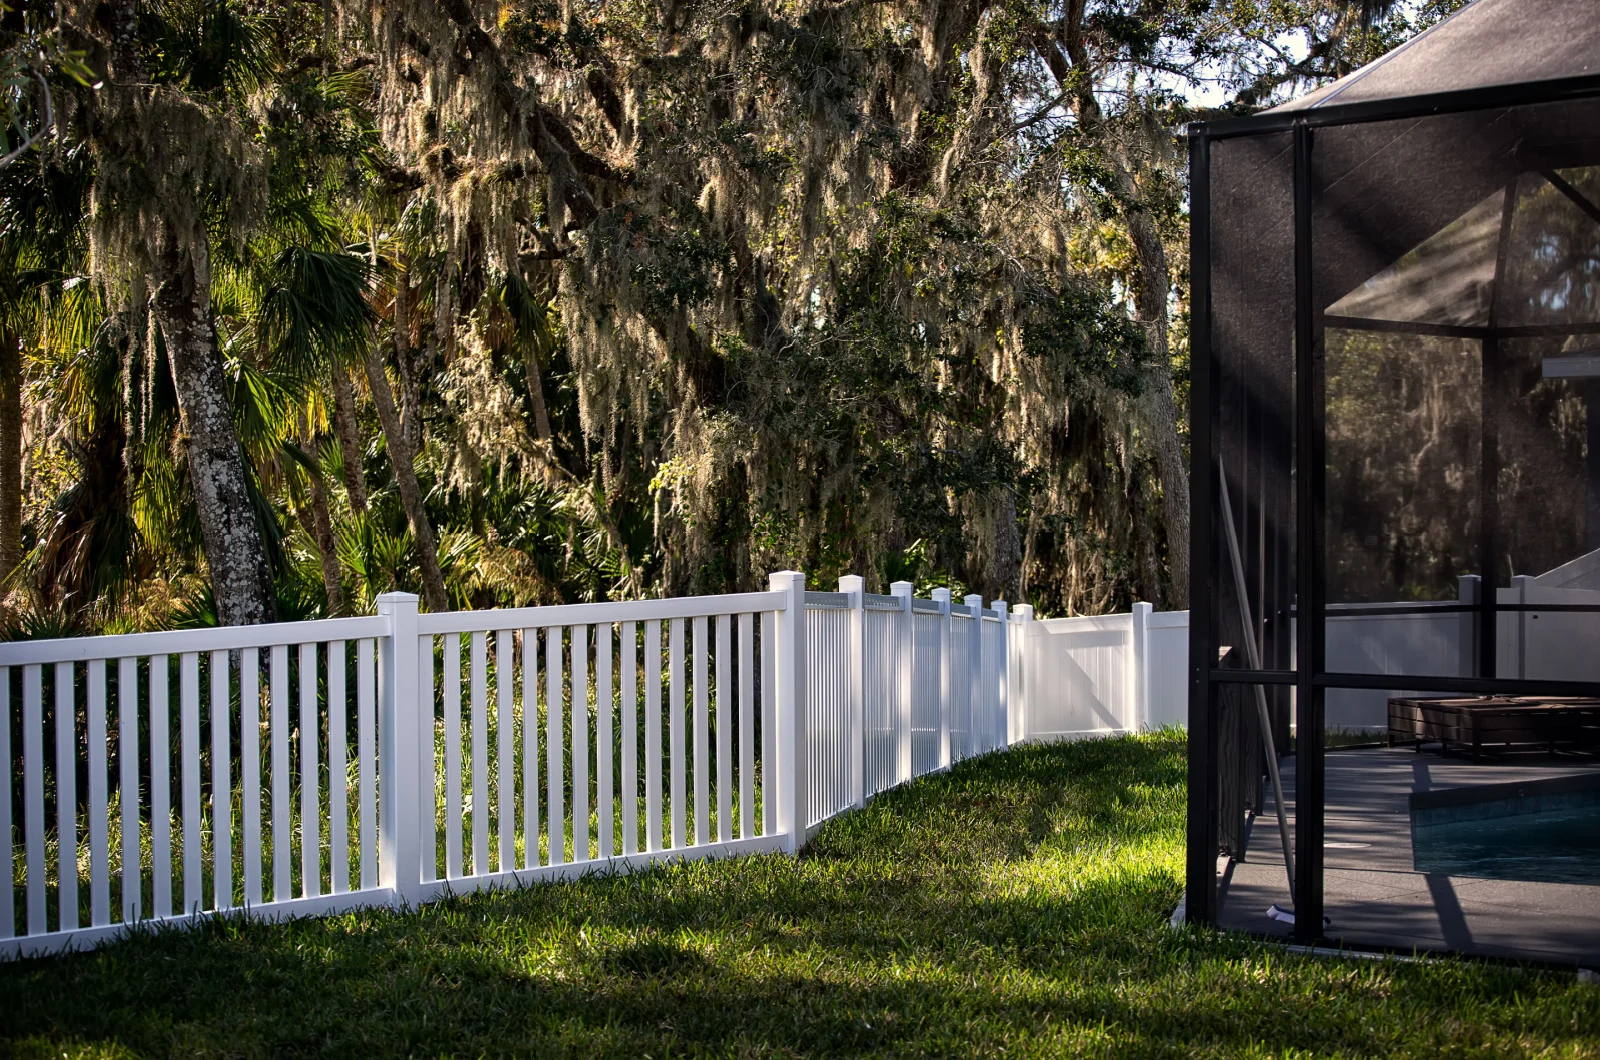 Semi Privacy fence in a yard